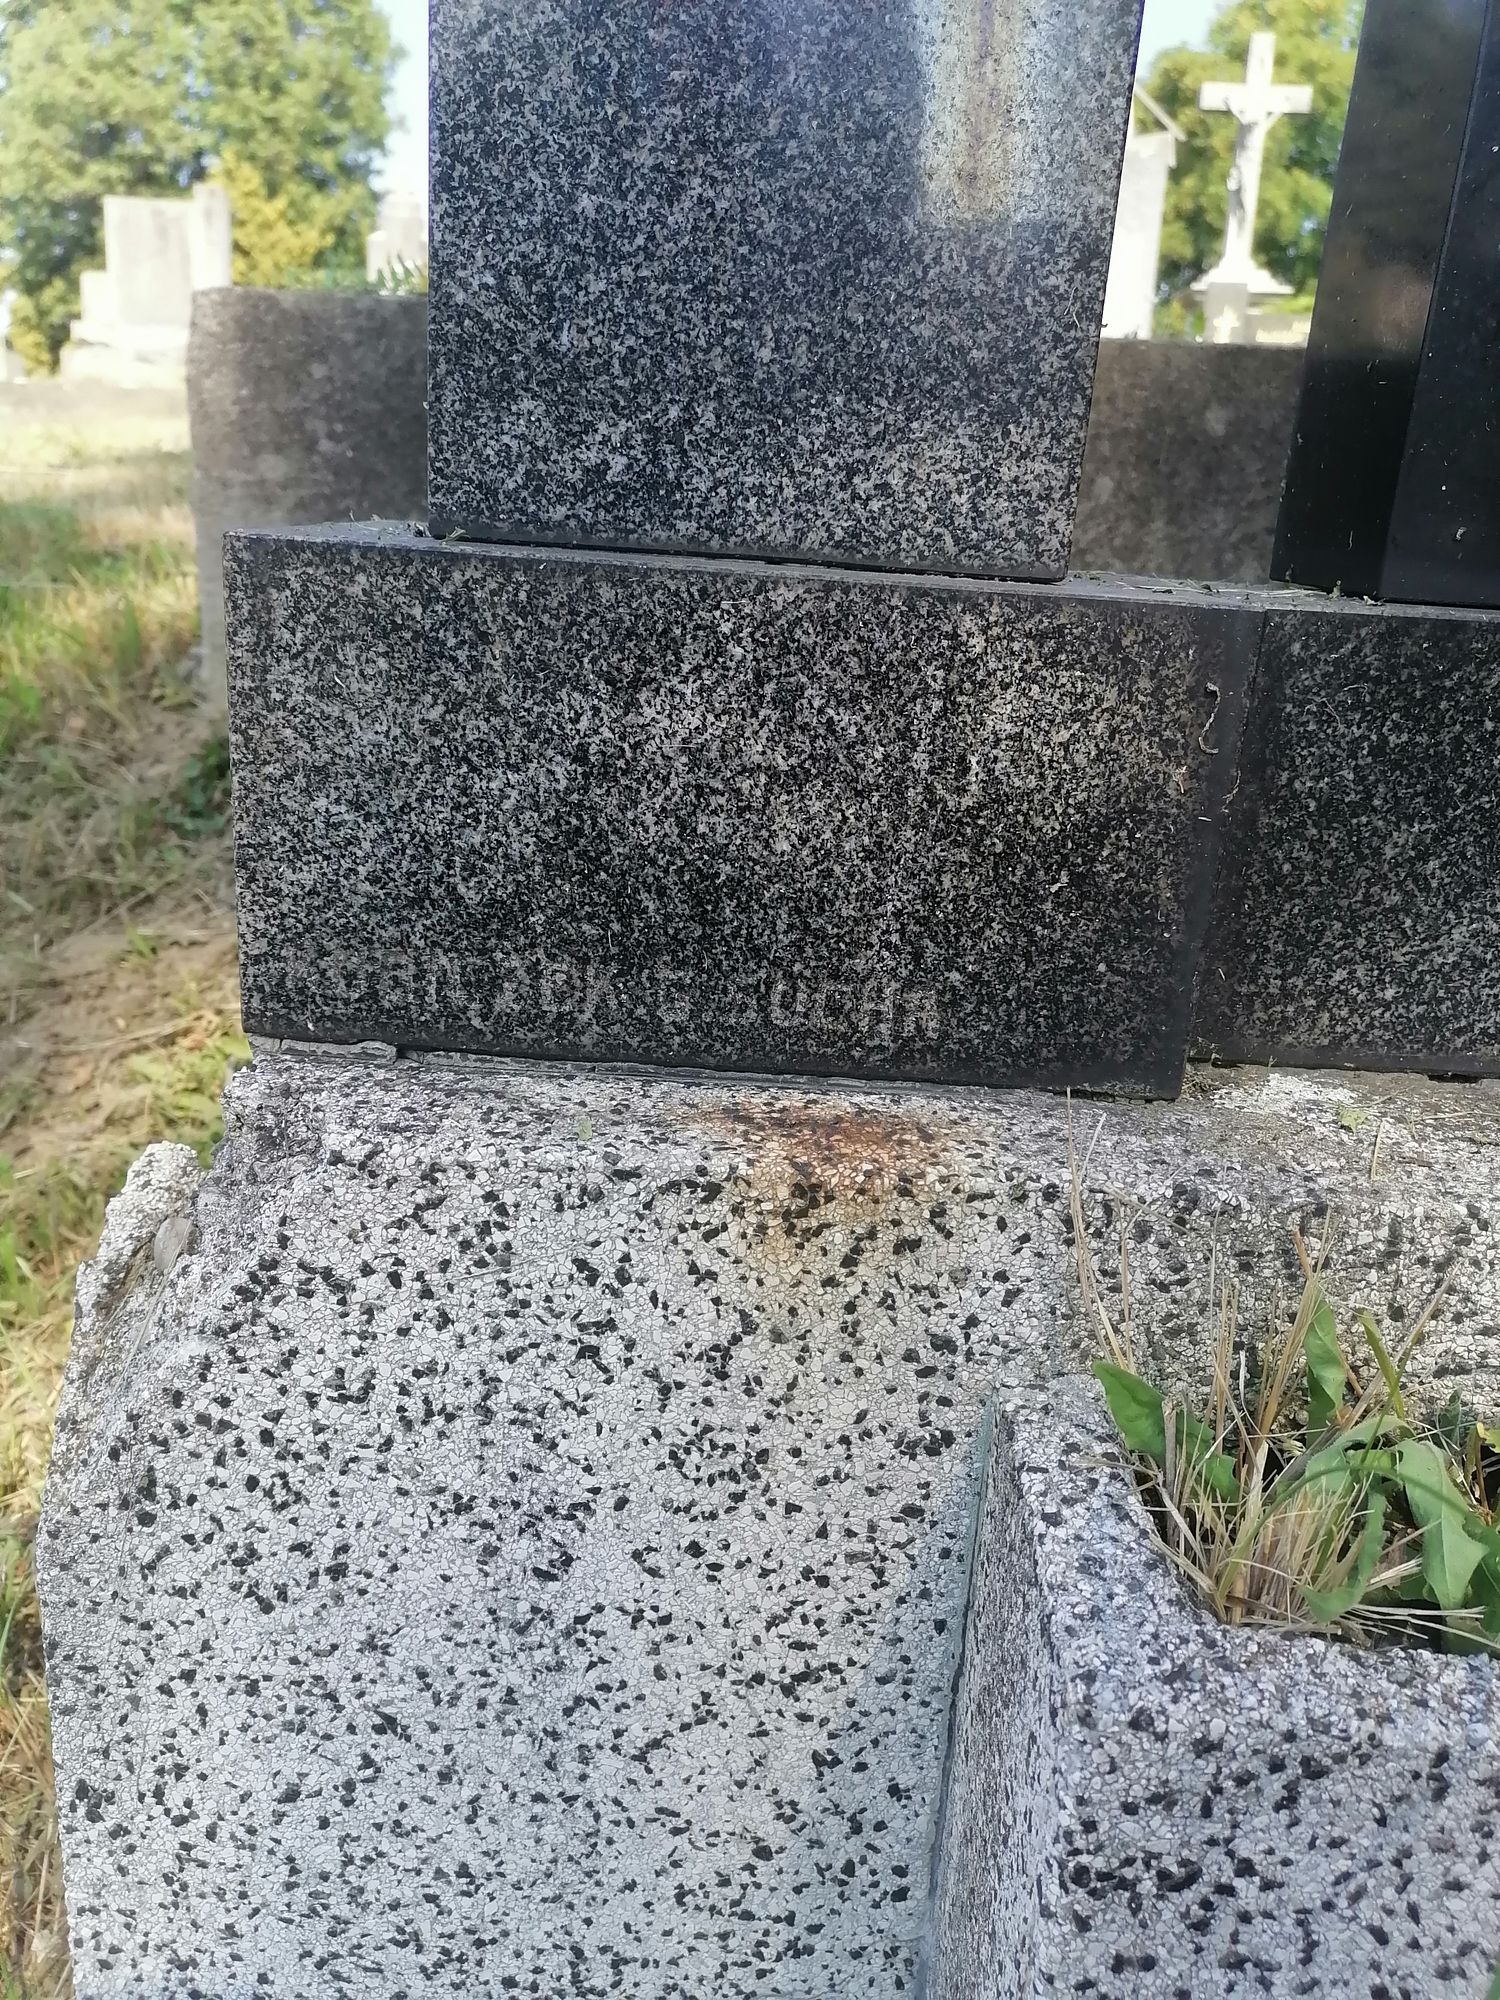 Tombstone of the Siud family, Karviná Doły cemetery, state 2022